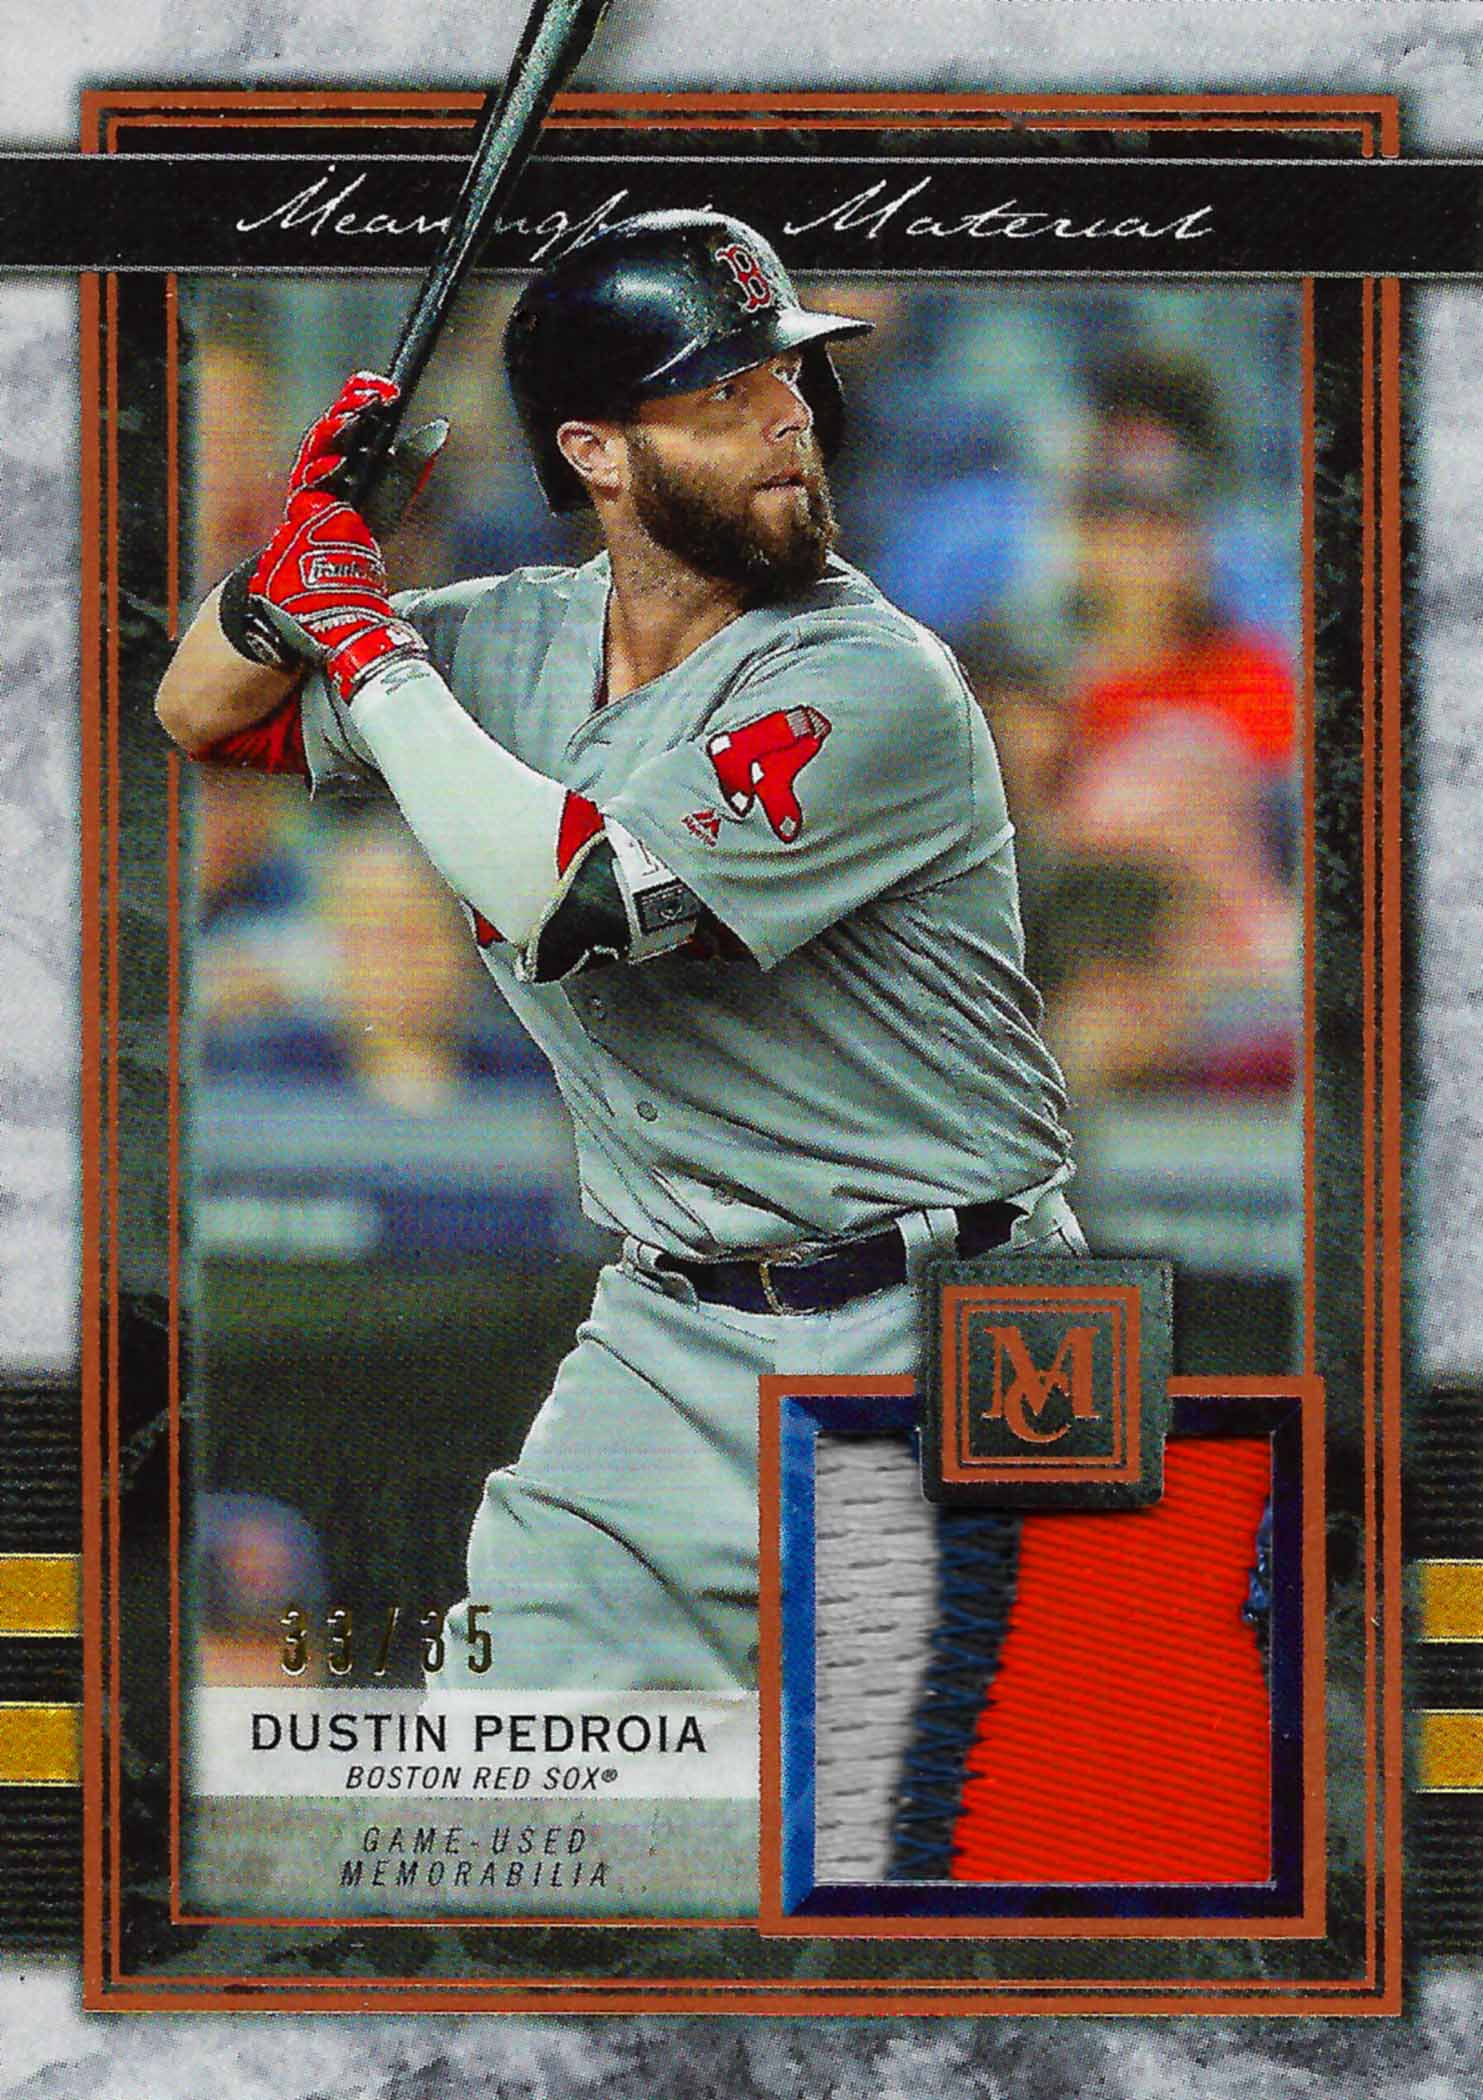 Dustin Pedroia Game Worn Jersey Baseball Card